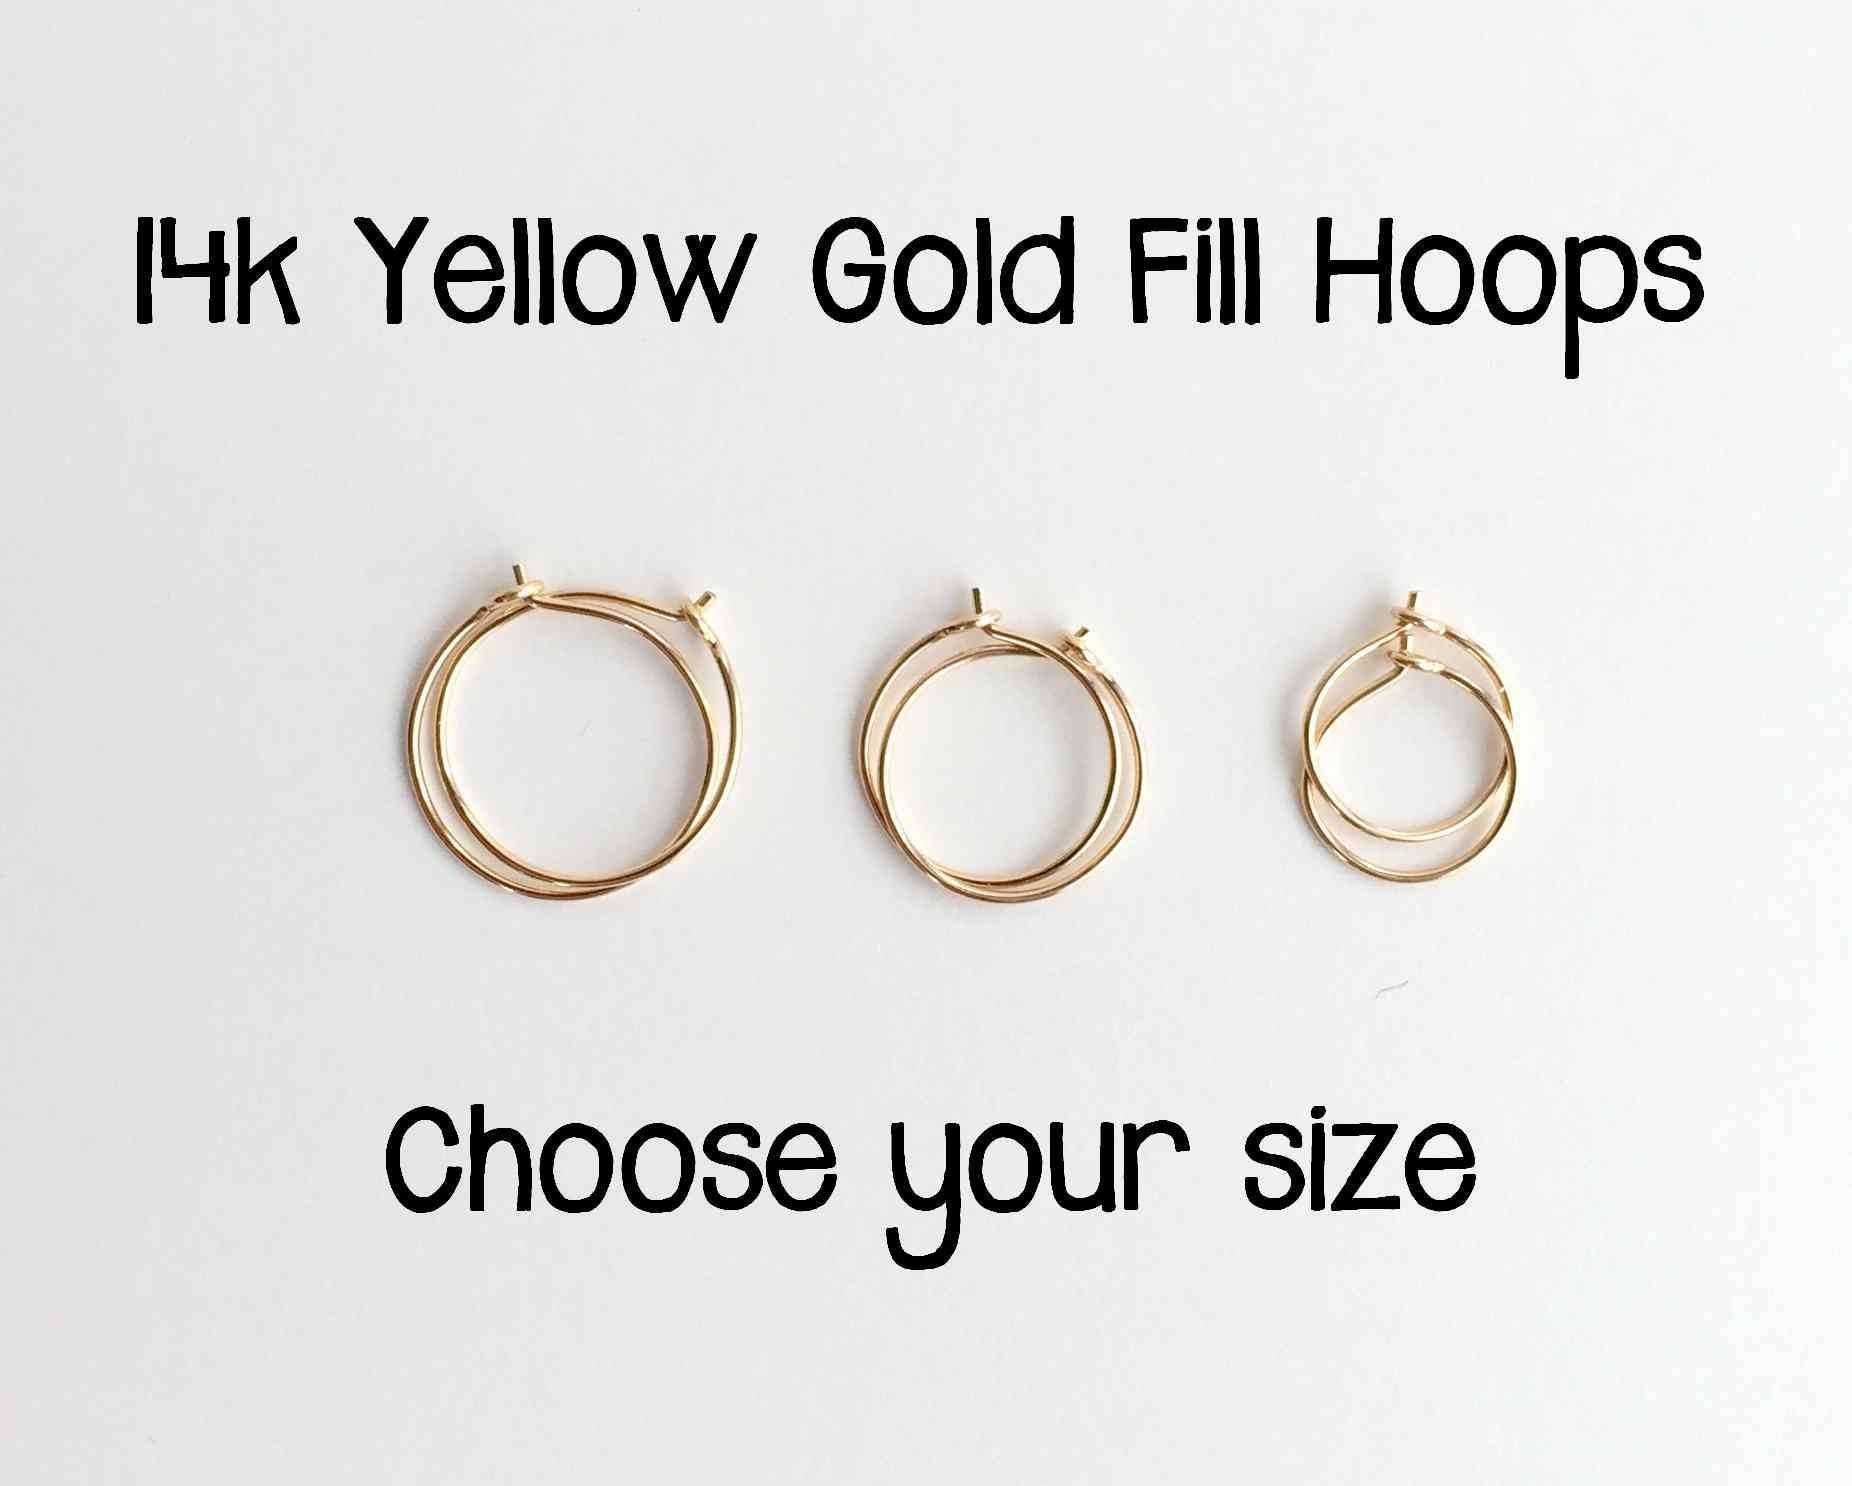 Thick Mini Hoop Earrings | Everyday Earrings in Sterling Silver or 14K Gold Fill 14K Gold Fill